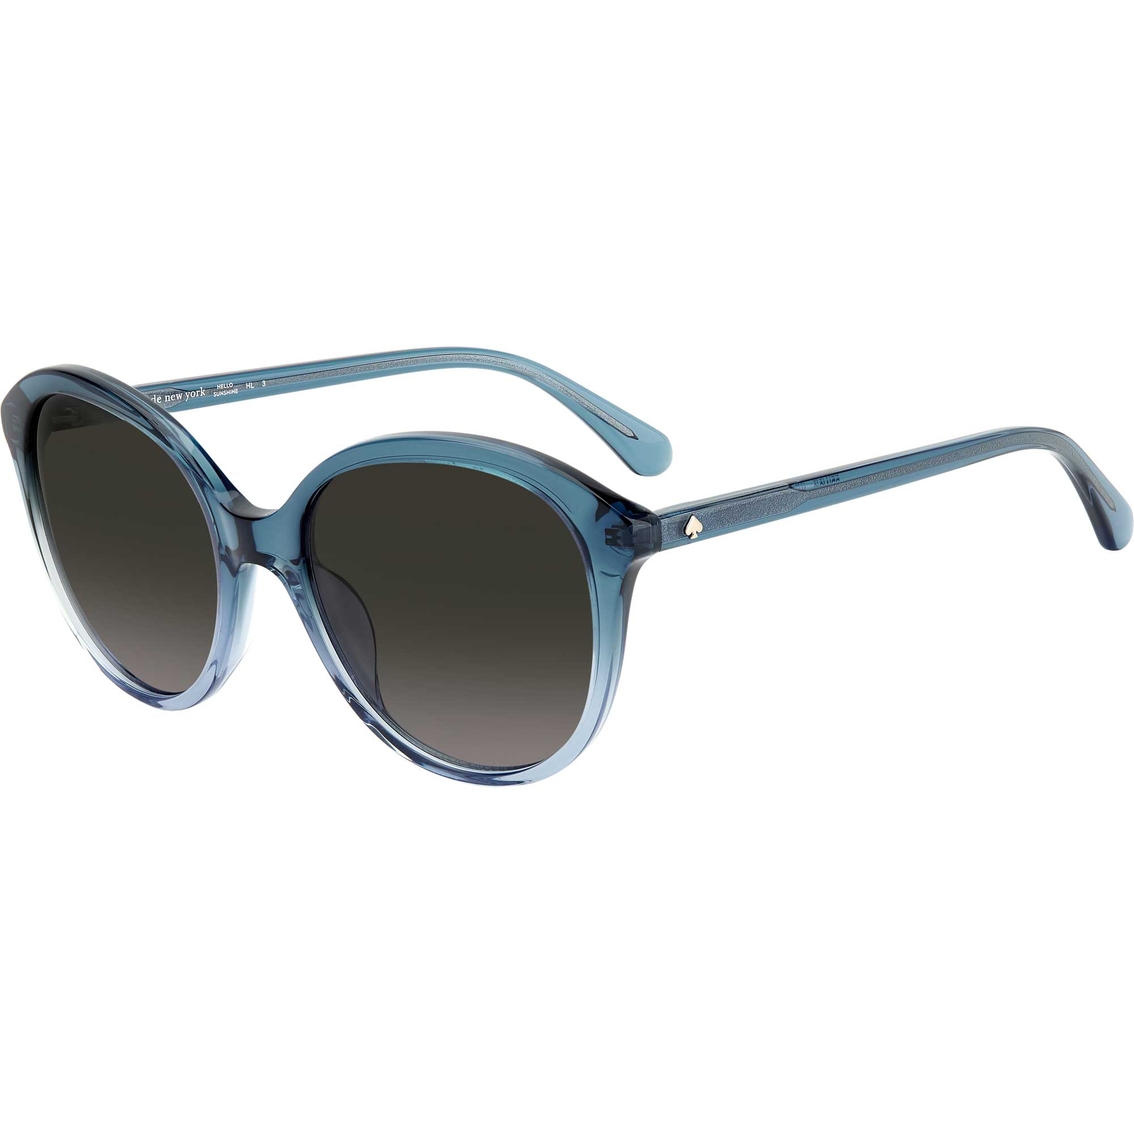 Kate Spade Bria Sunglasses 086ha | Sunglasses | Clothing & Accessories ...